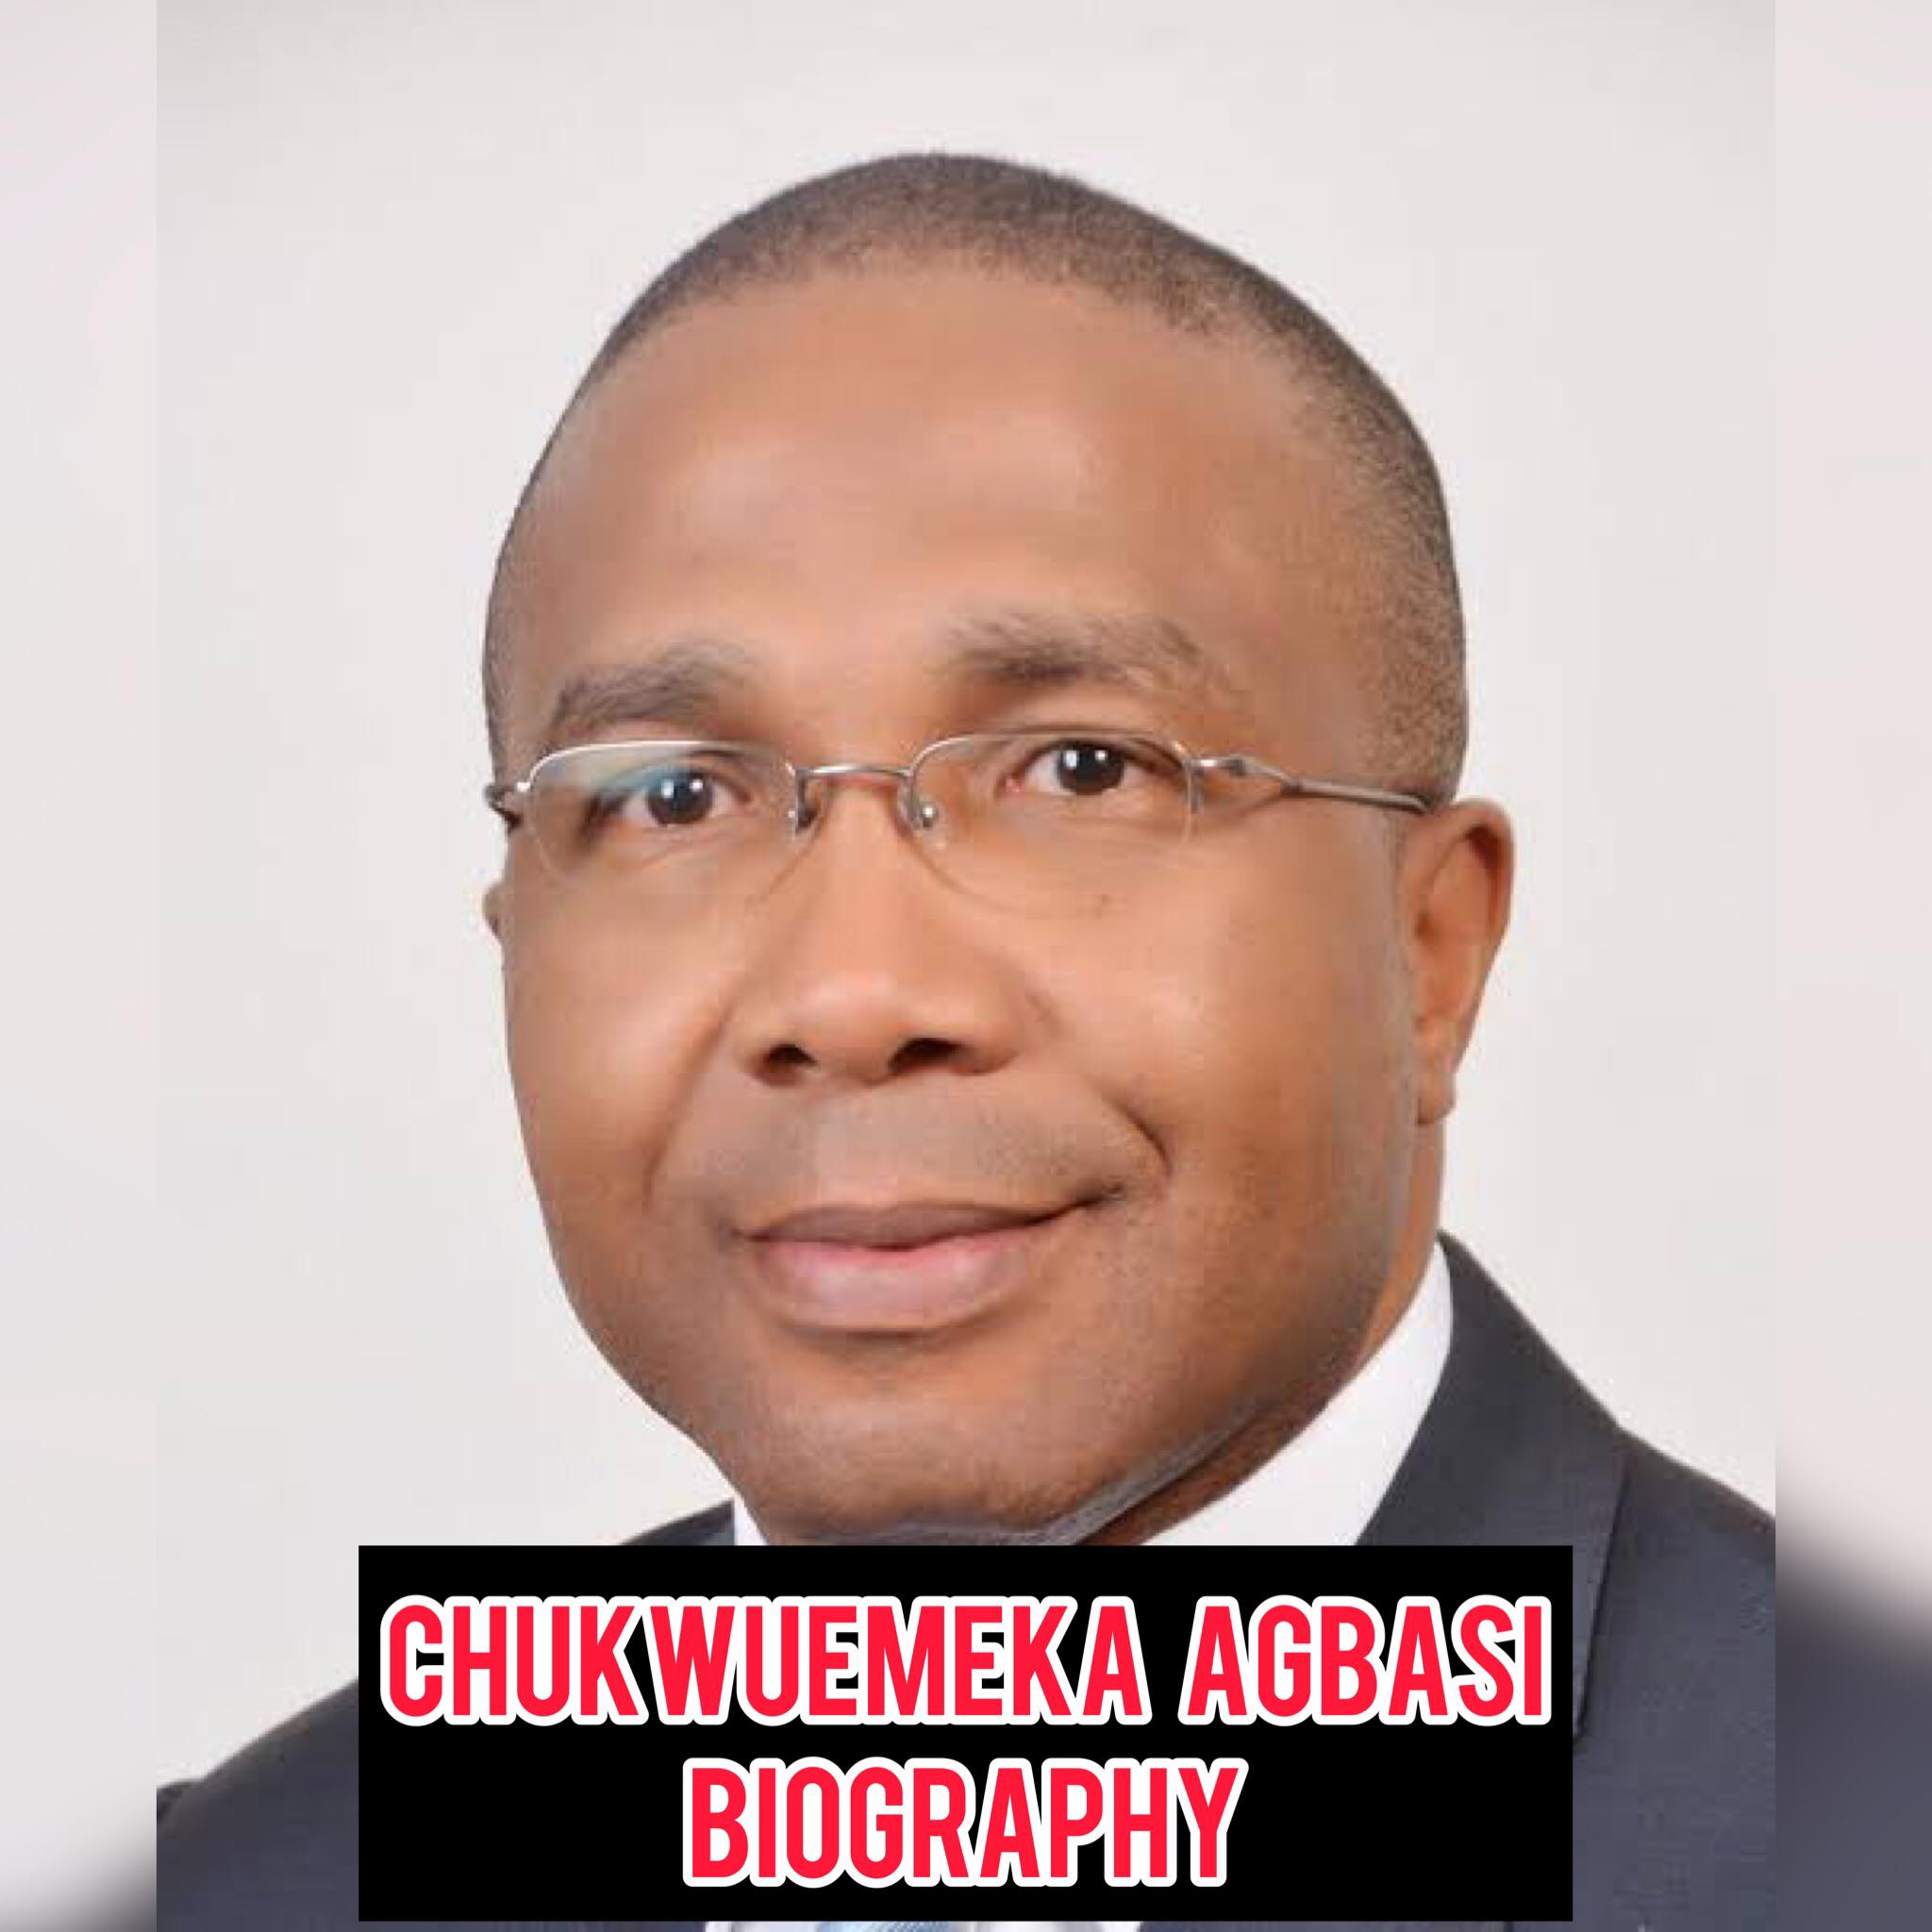 Chukwuemeka Agbasi Biography